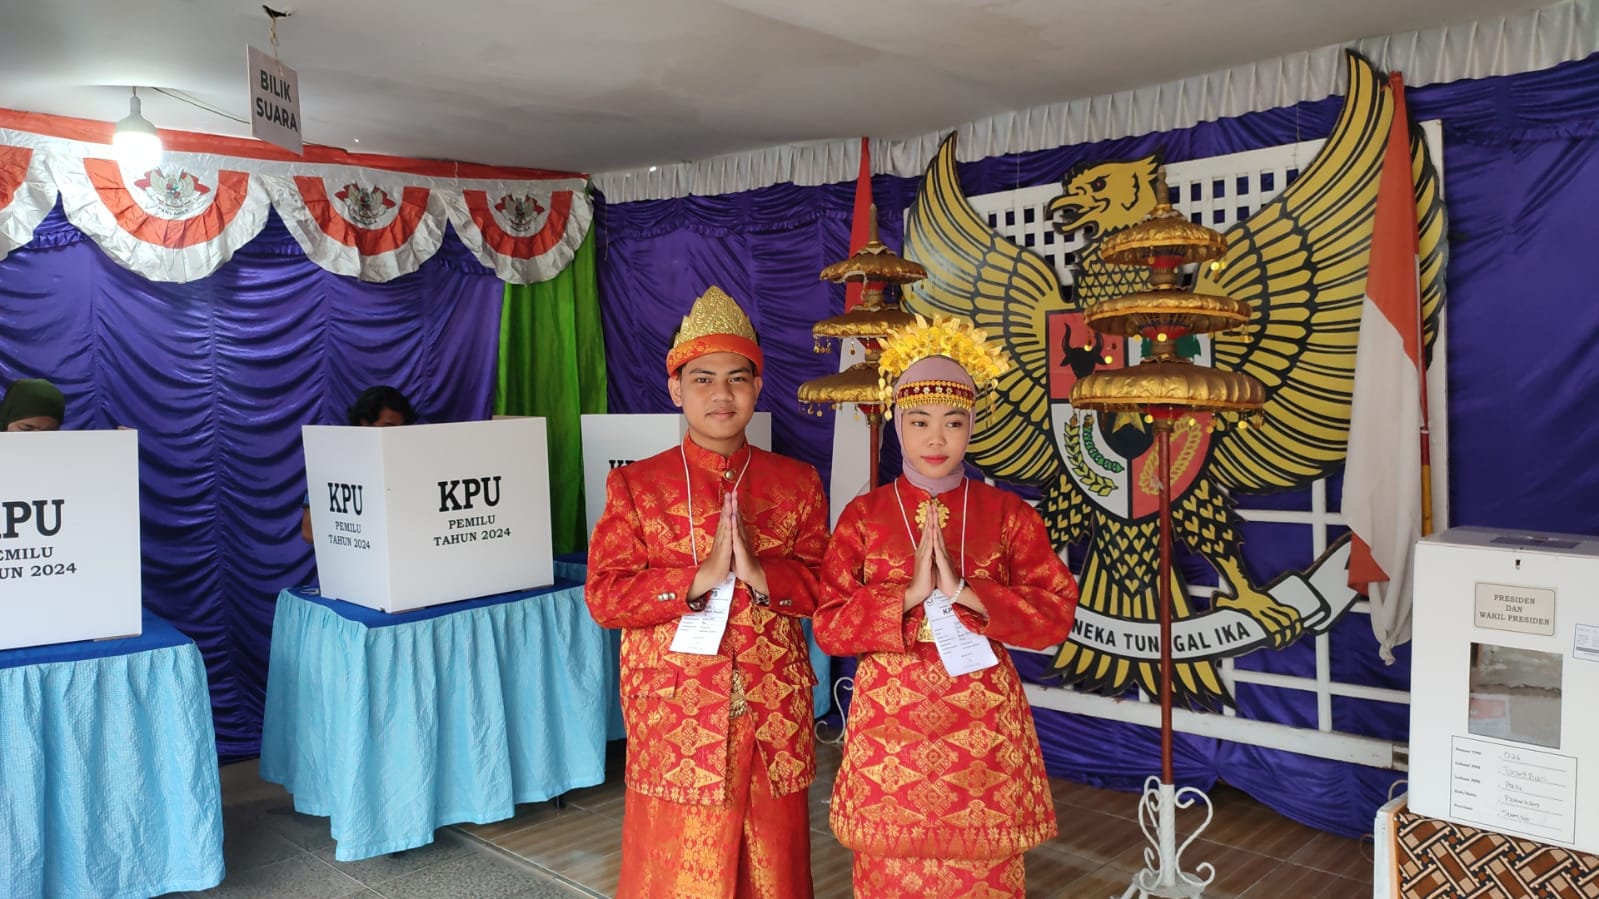 TPS 26 Sidomukti Plaju Bernuansa Adat Palembang, Ketua KPPS: Ingatkan Anak Muda Terus Cintai Budaya Lokal